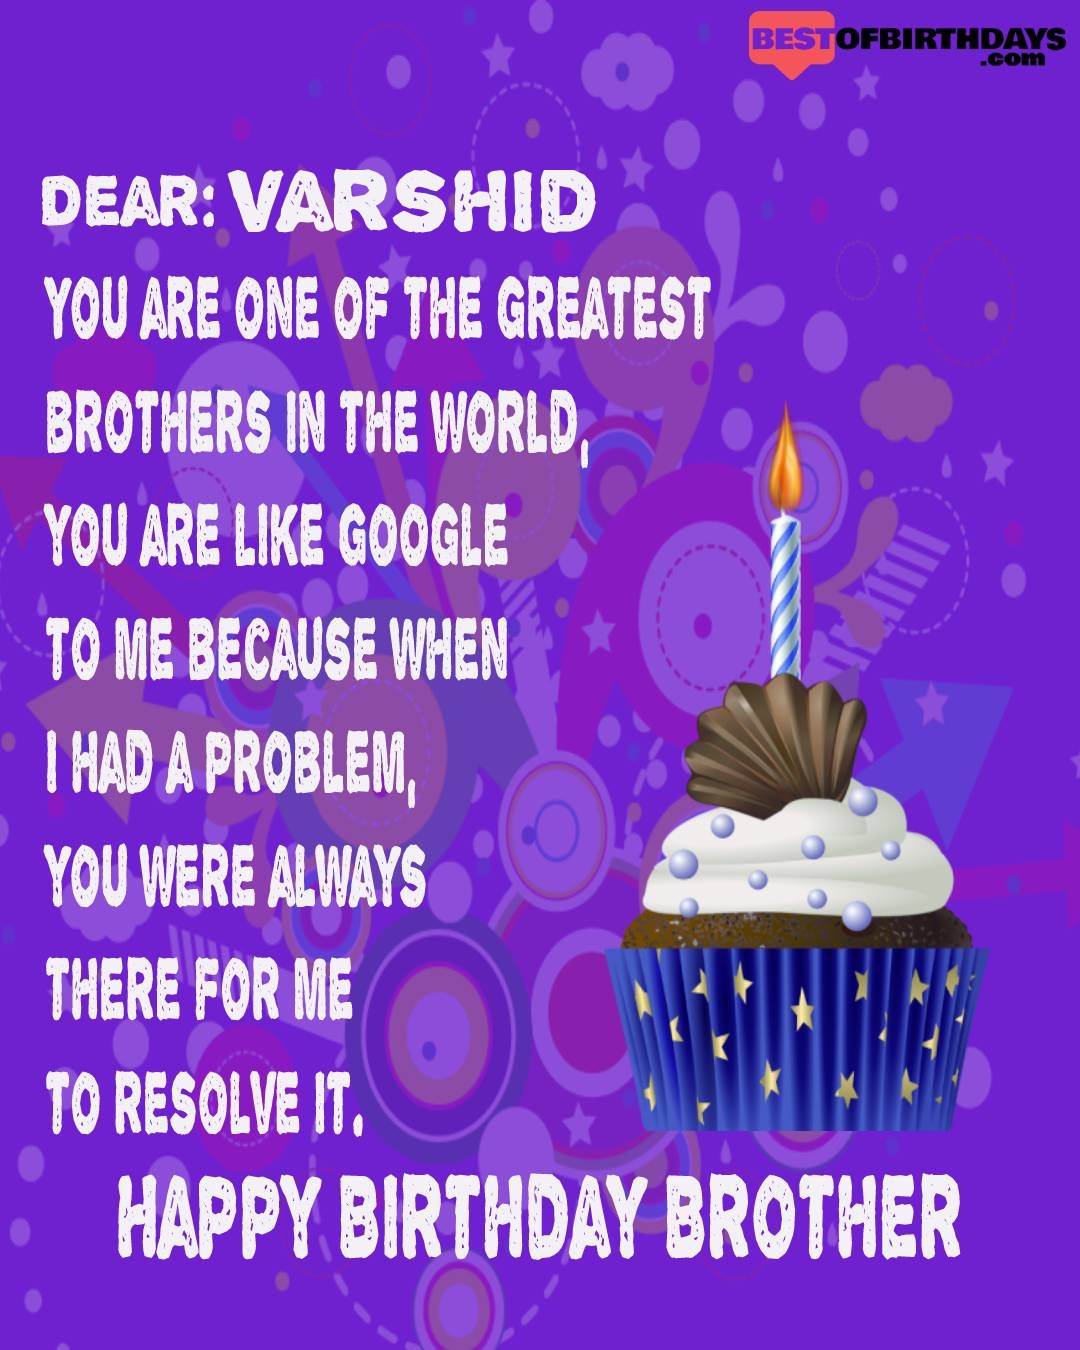 Happy birthday varshid bhai brother bro